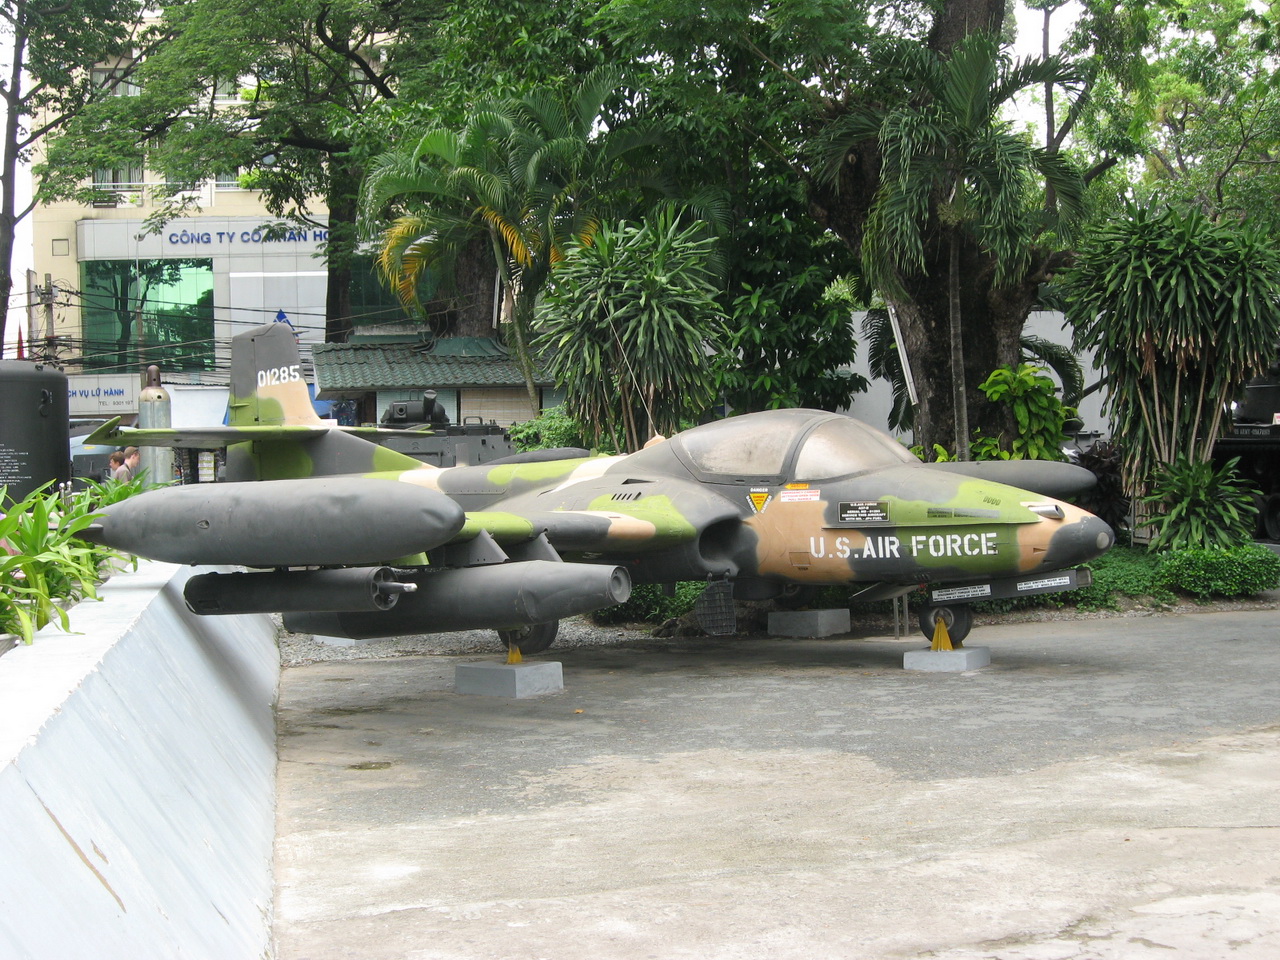 War remnants muzej